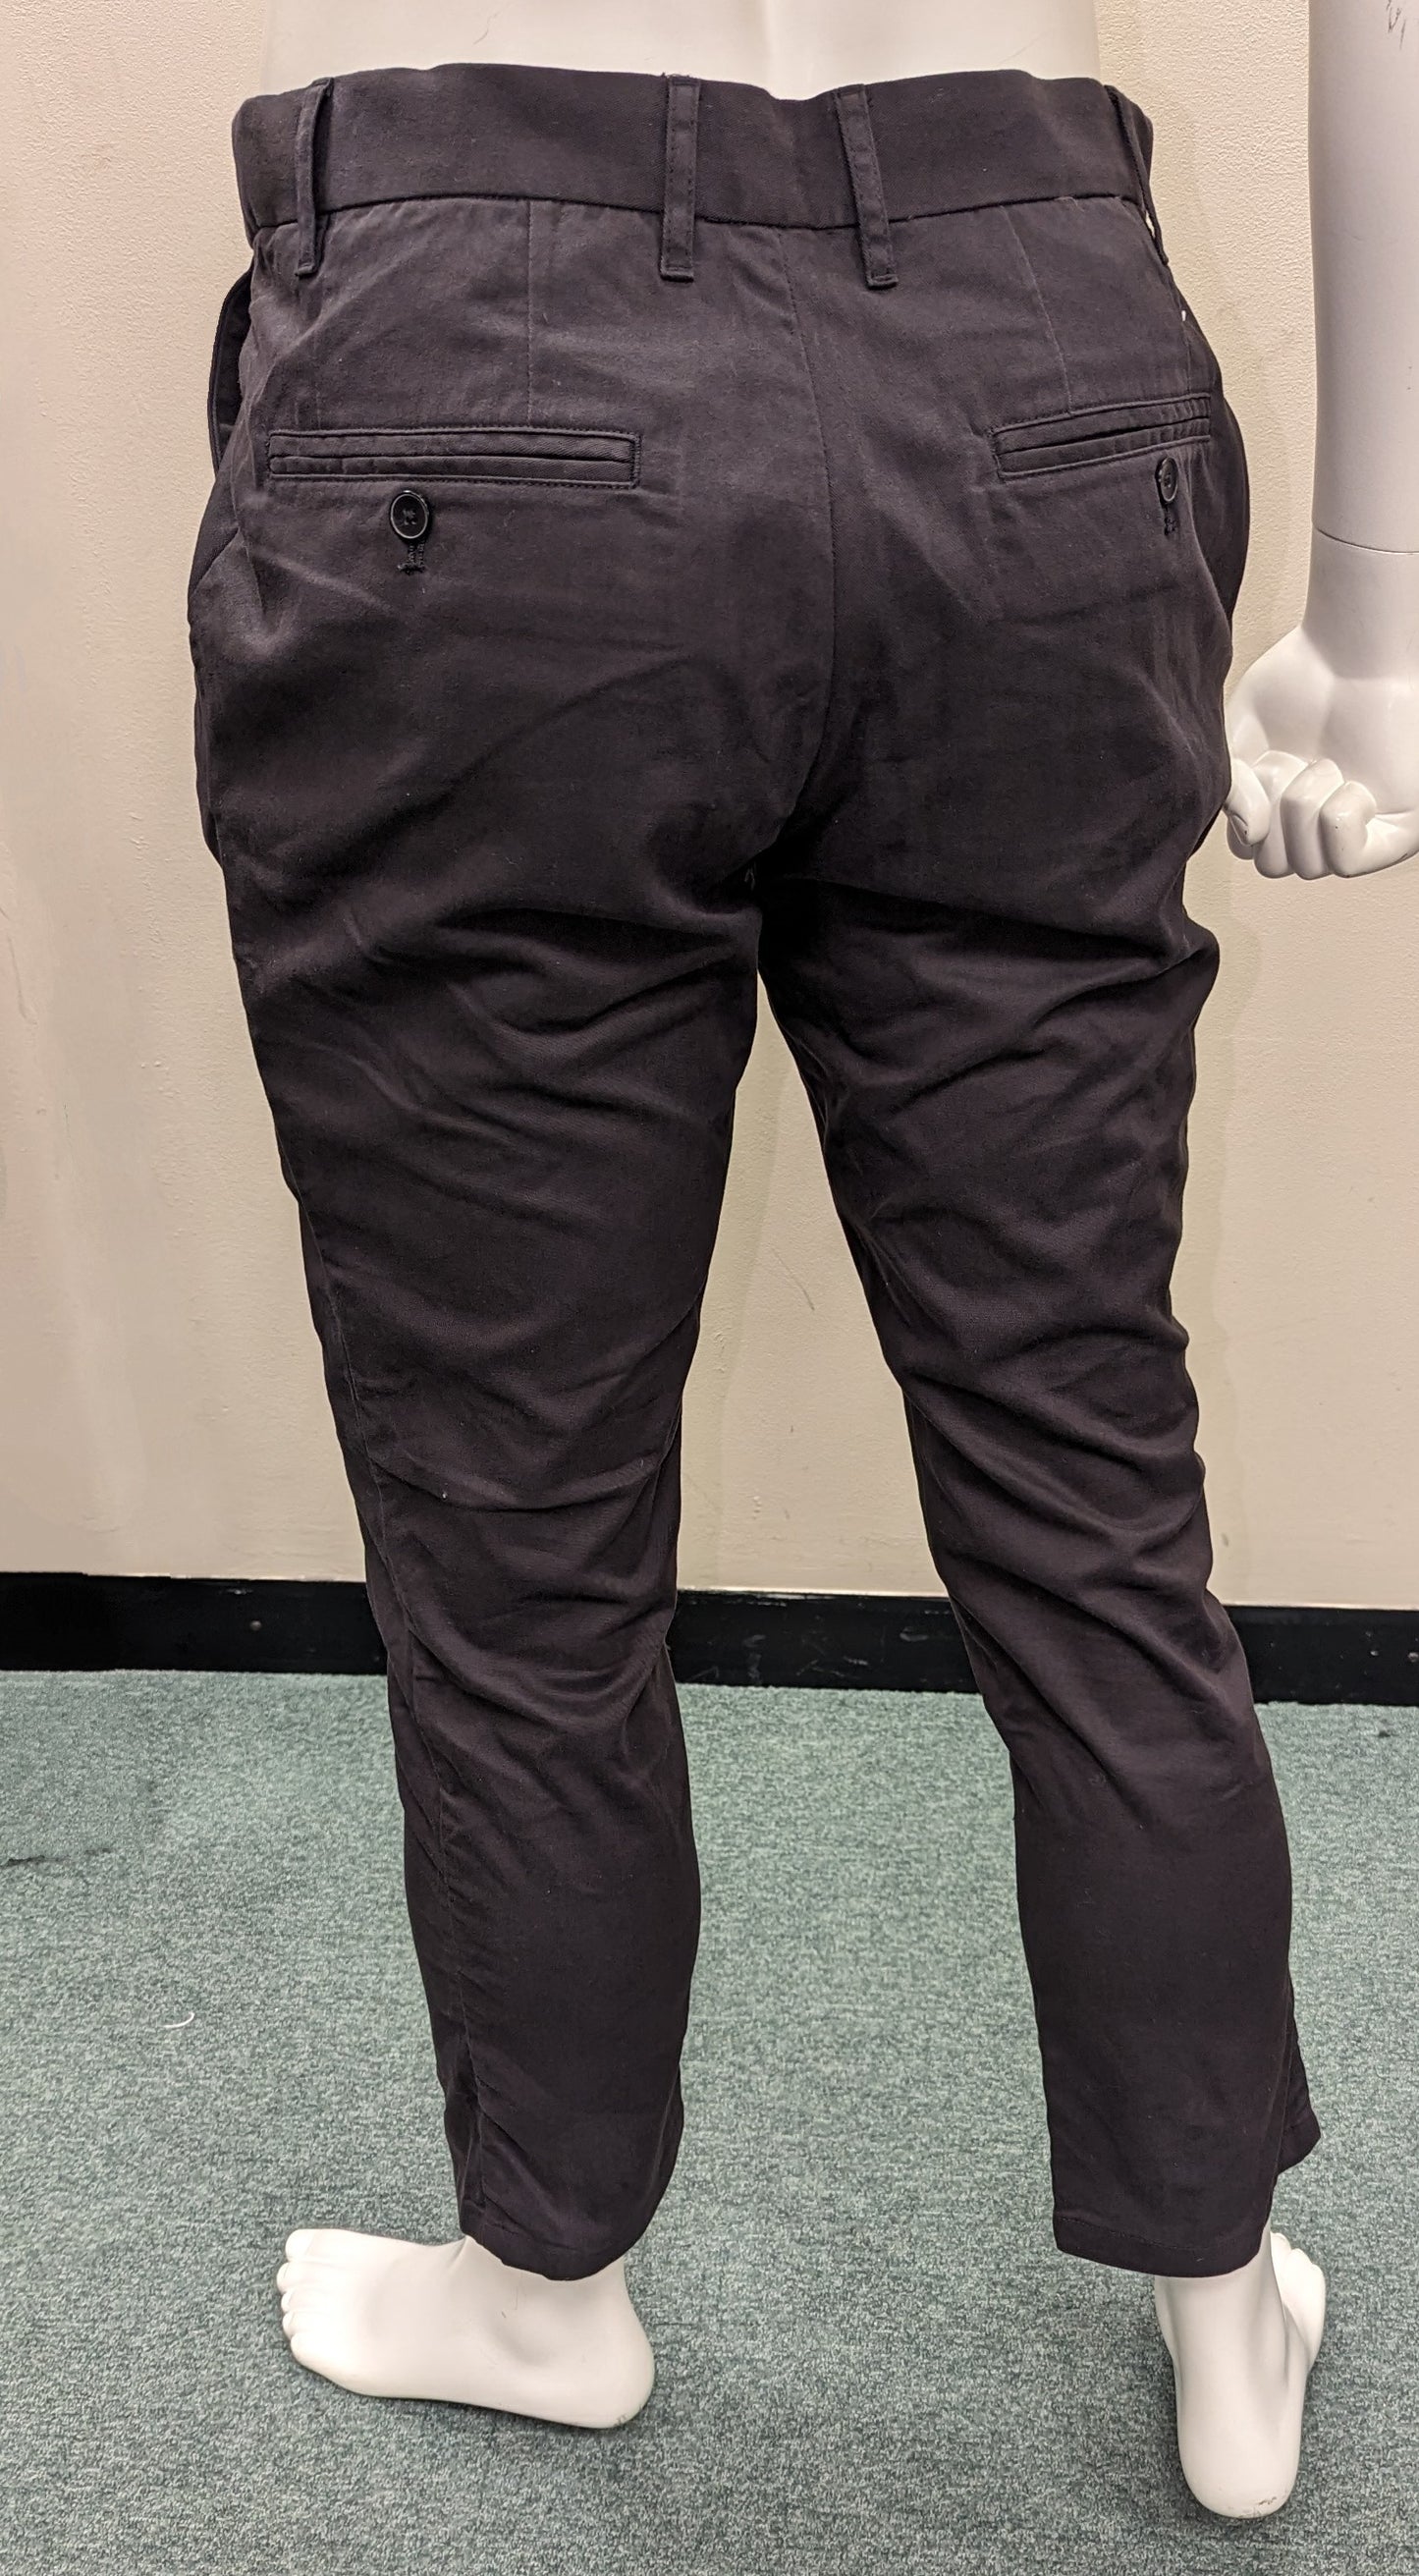 Men's Rohan Office Trousers - Size 34S